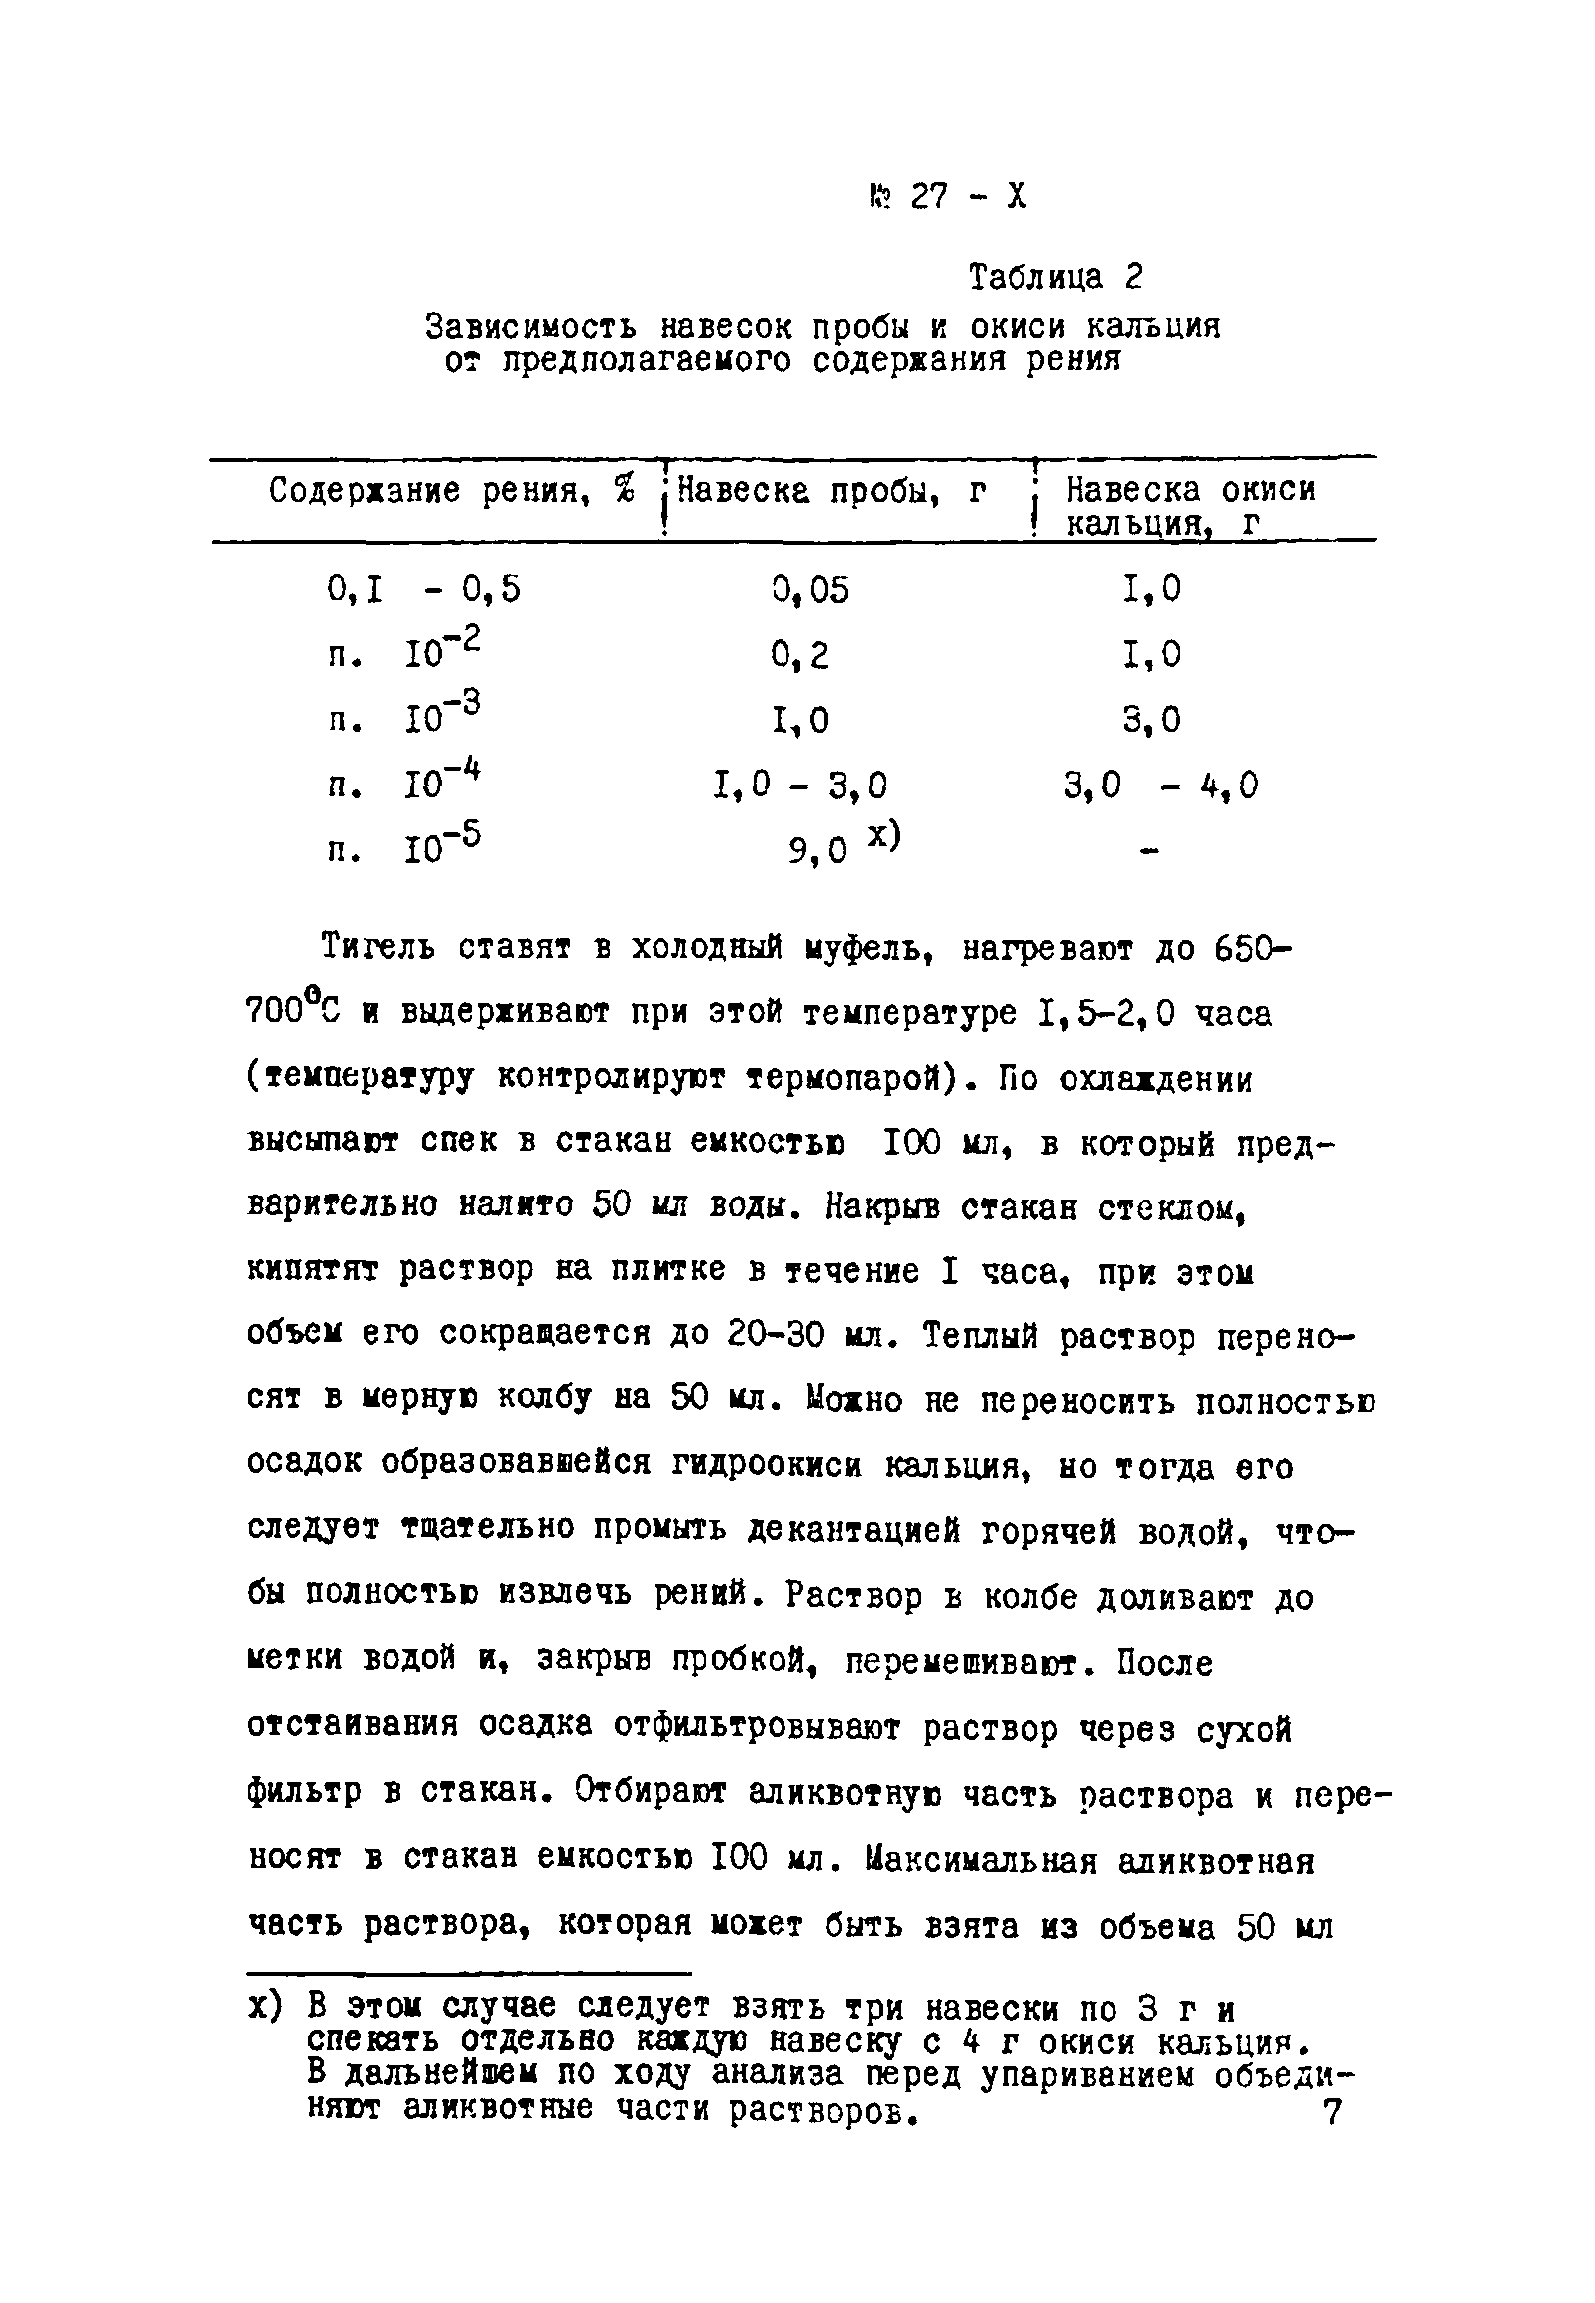 Инструкция НСАМ 27-Х